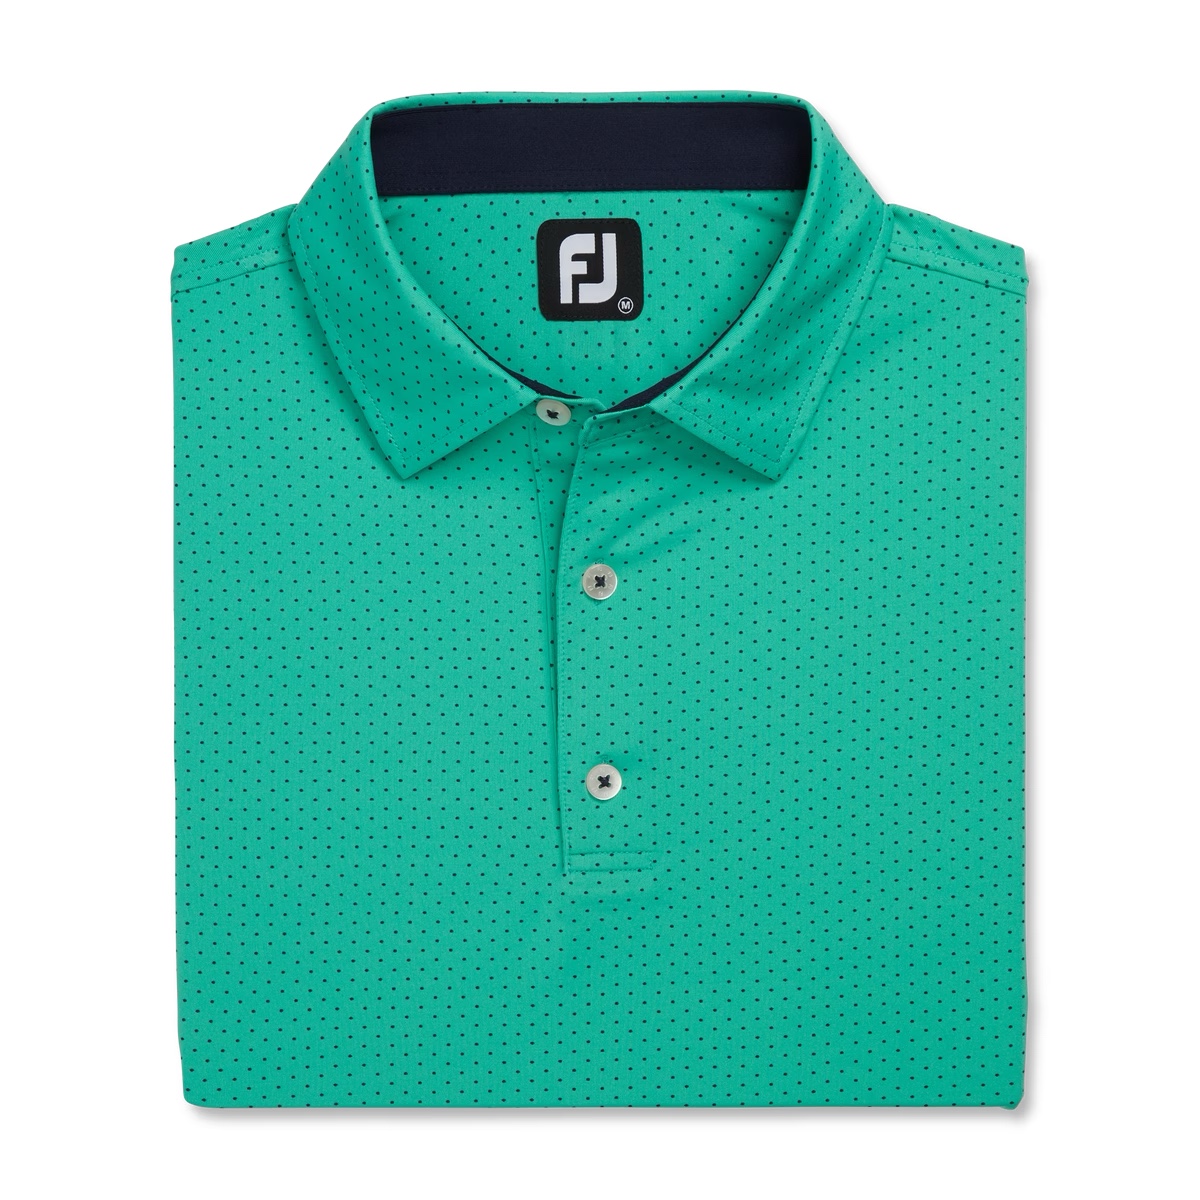 FootJoy Stretch Lisle Dot Print Self Collar Green/Navy  (M-XXL): $75.00 *Sale Price $60.00